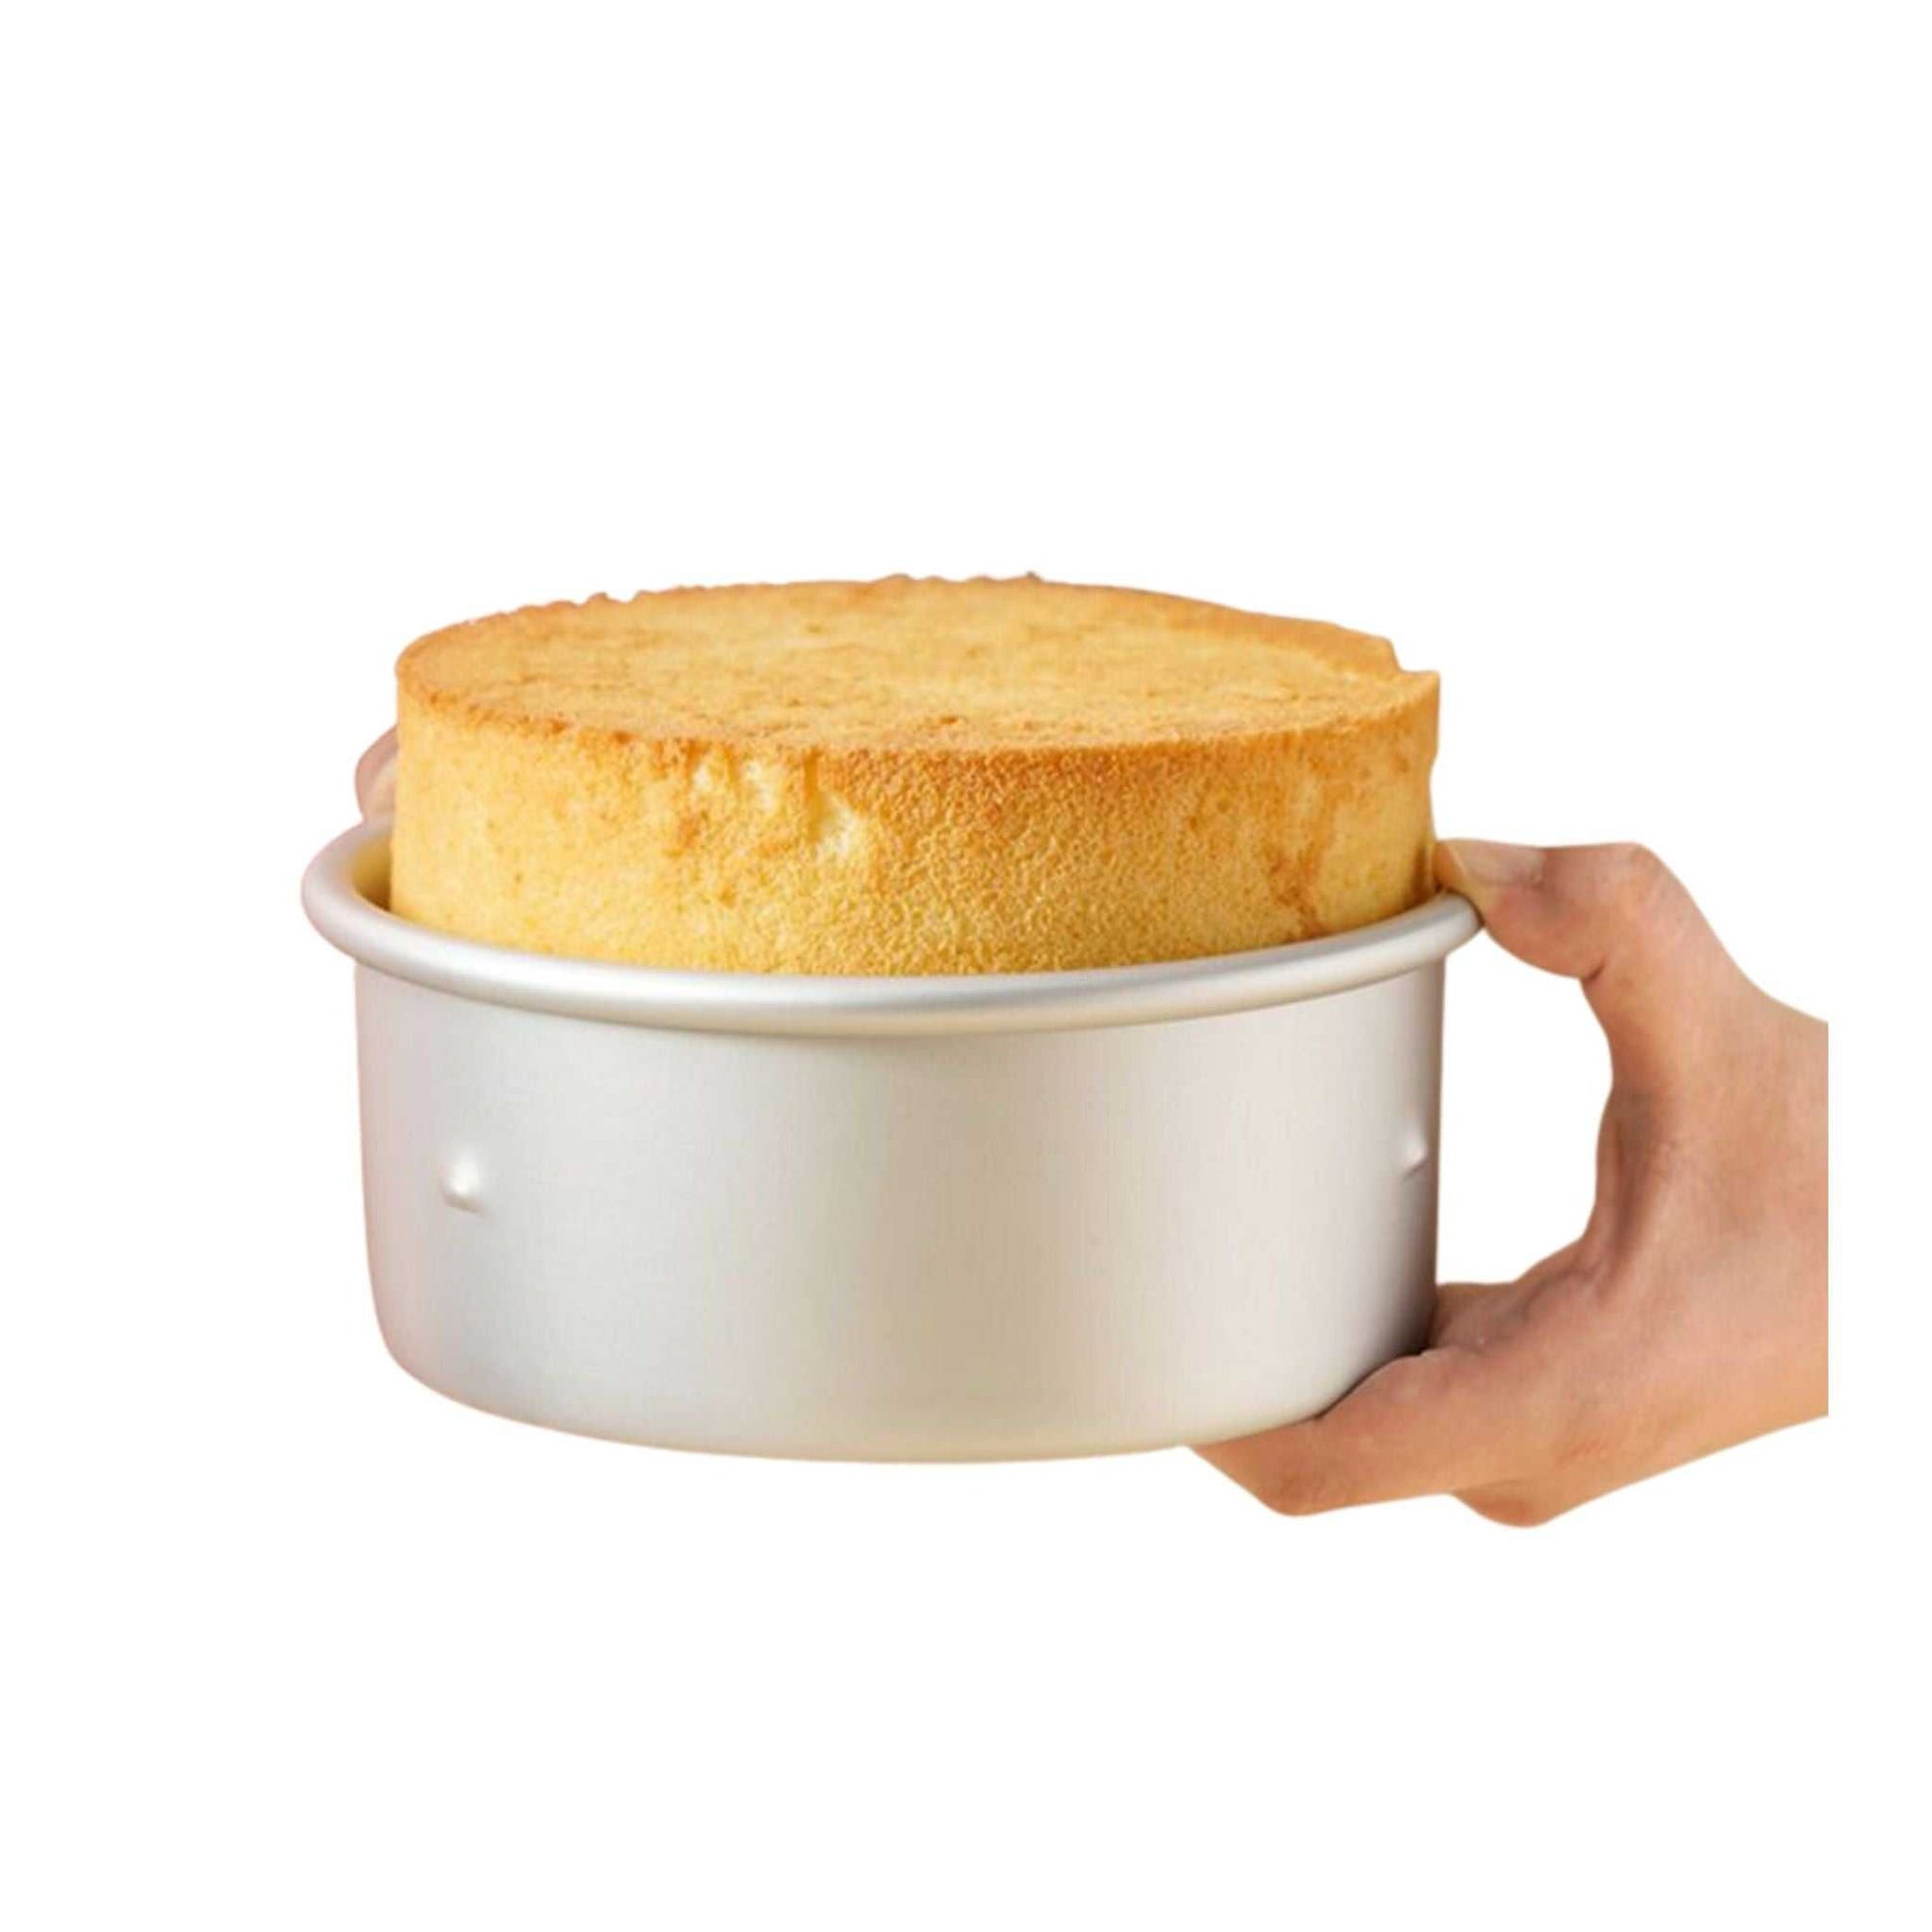 Castella Cake Mold, Nonstick Square Bread Mold Baking Pan 6-8 inch